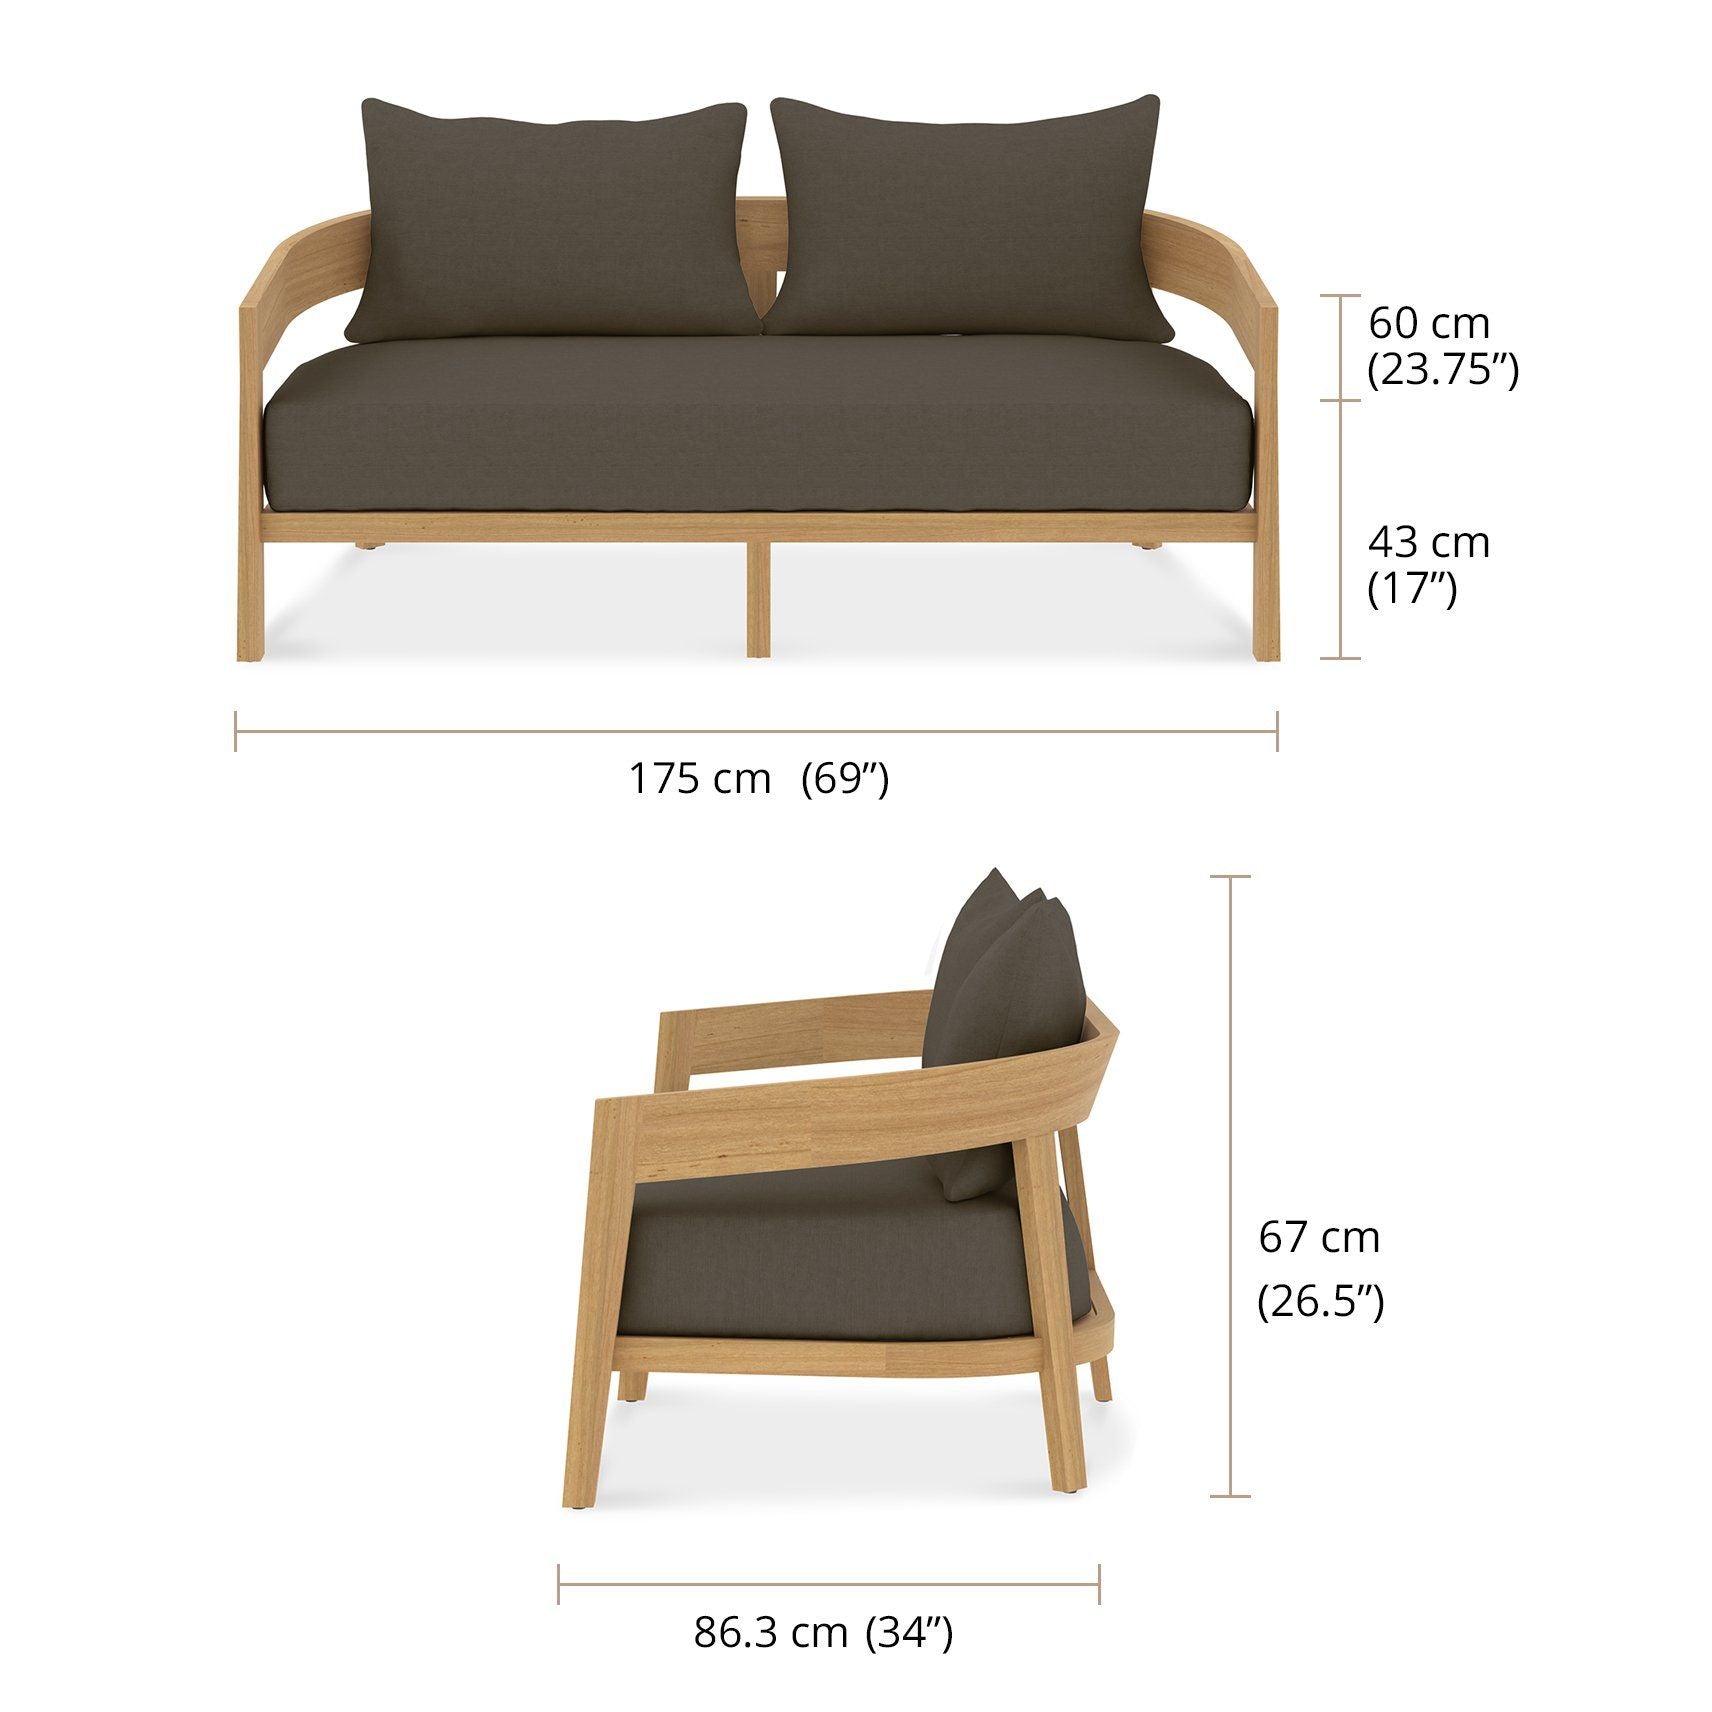 Dimensions - 2 Seater Sofa